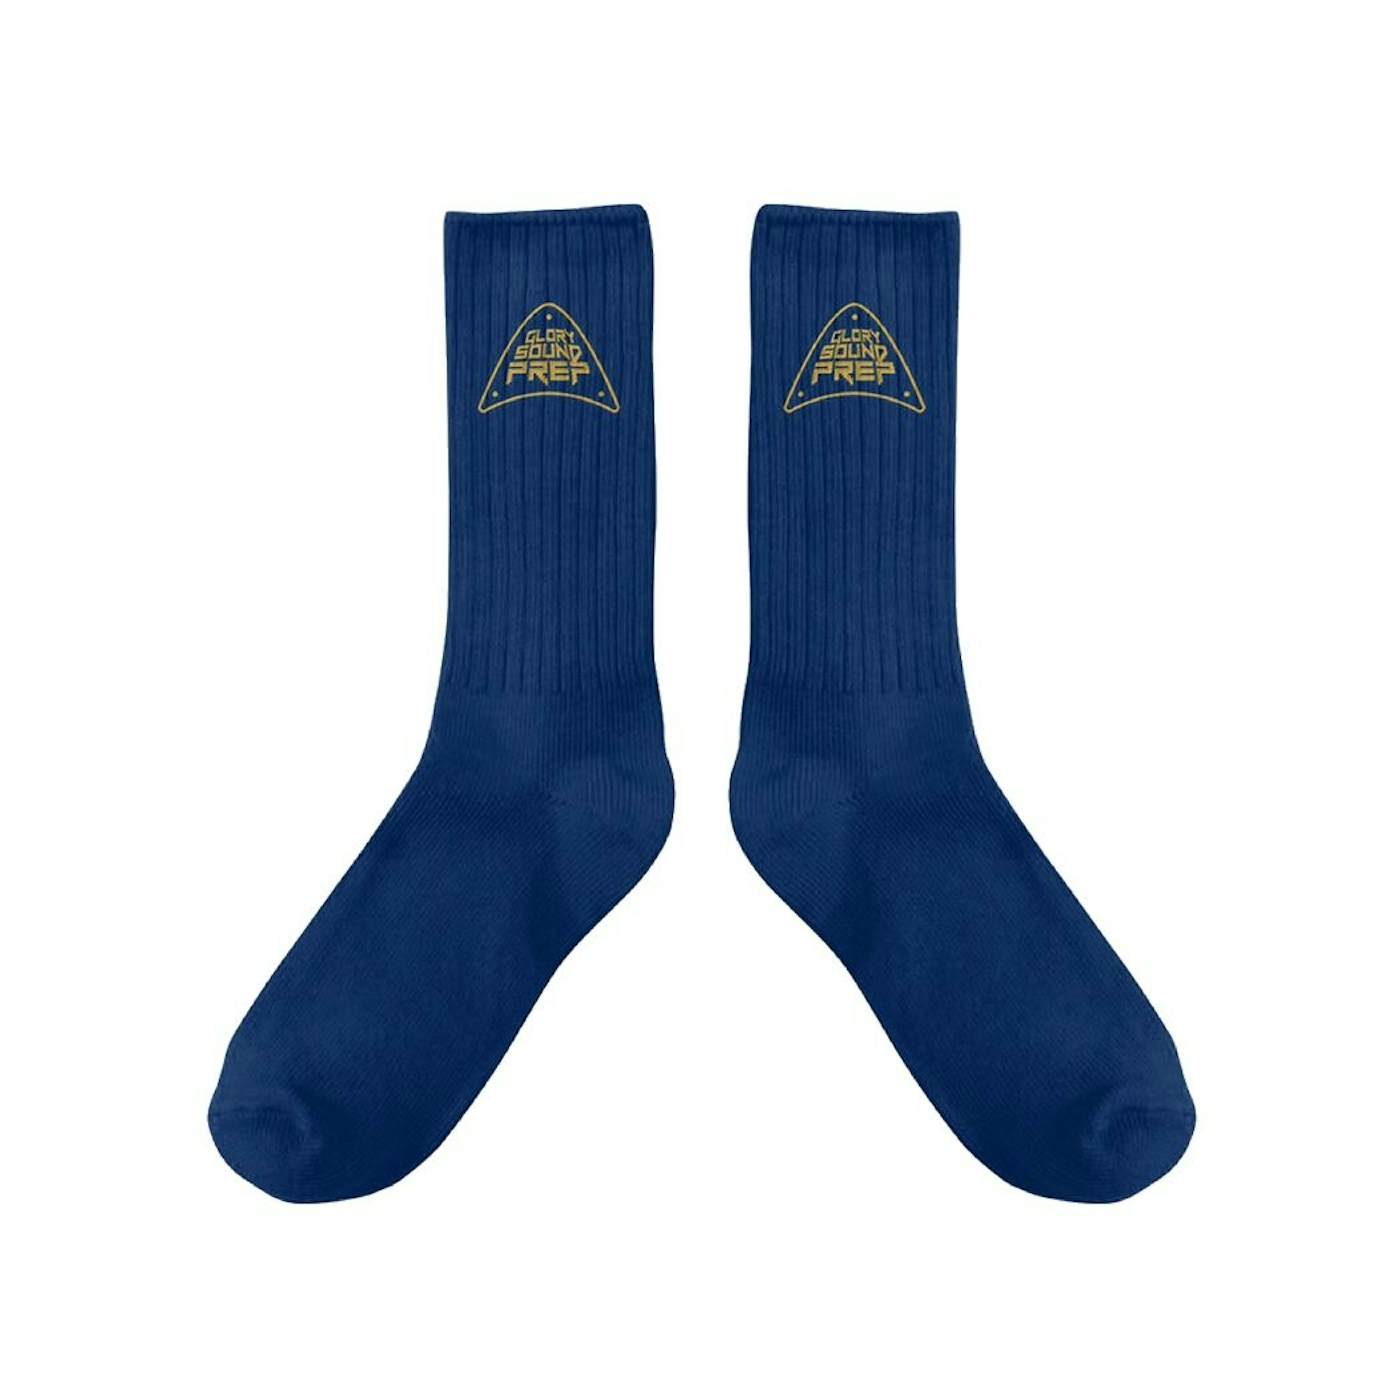 Jon Bellion GSP Navy Socks